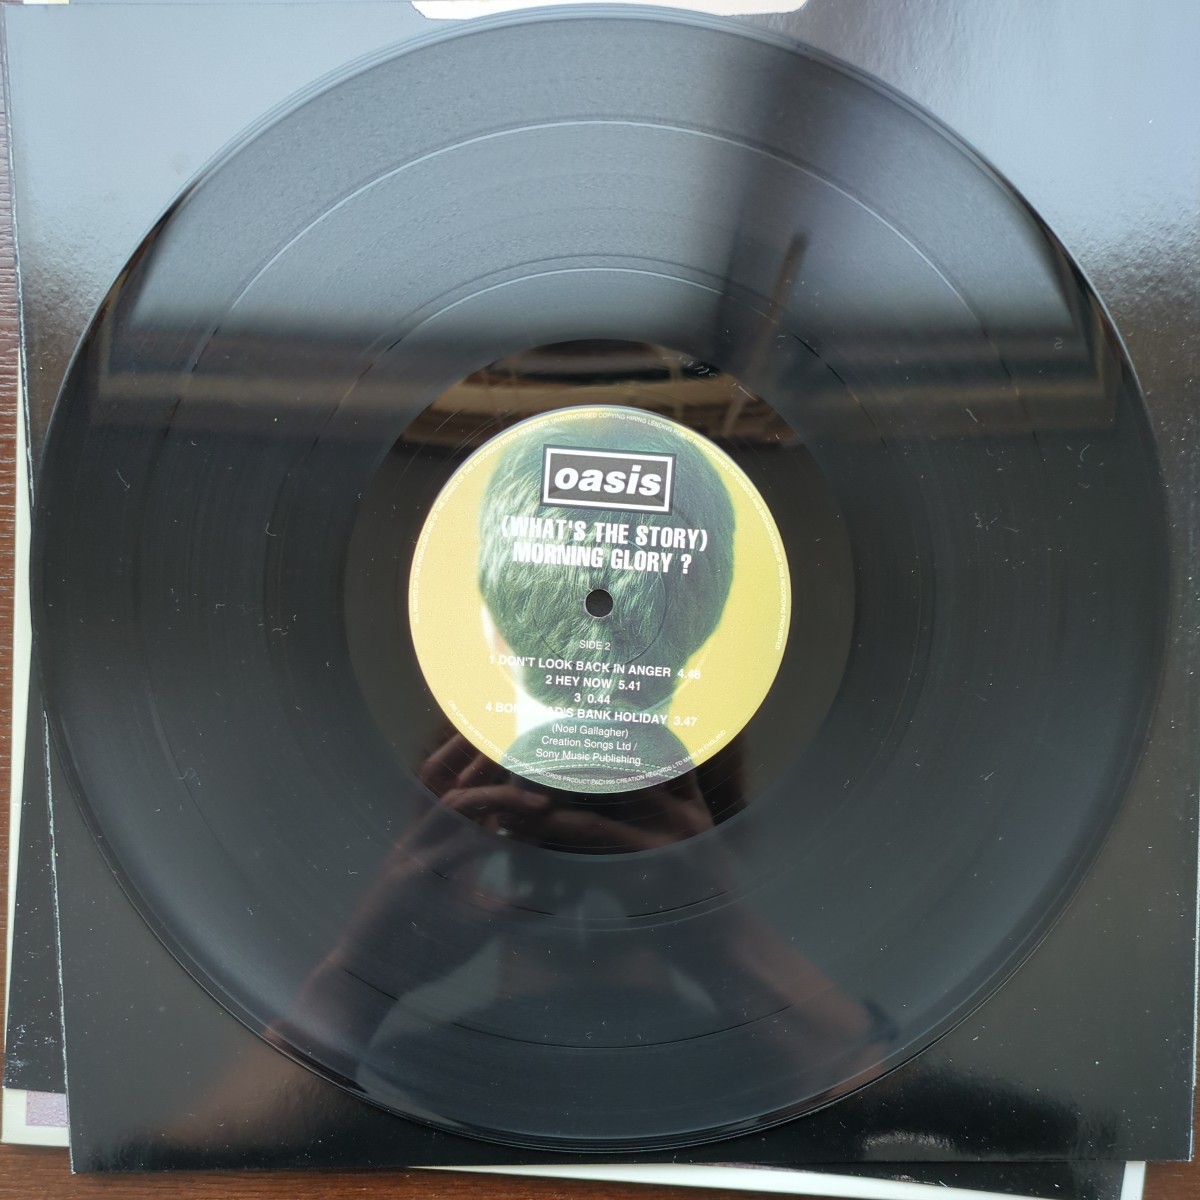 UK original damont crelp189 oasis オアシス MORNING GLORY モーニング・グローリー analog record レコード LP アナログ vinyl